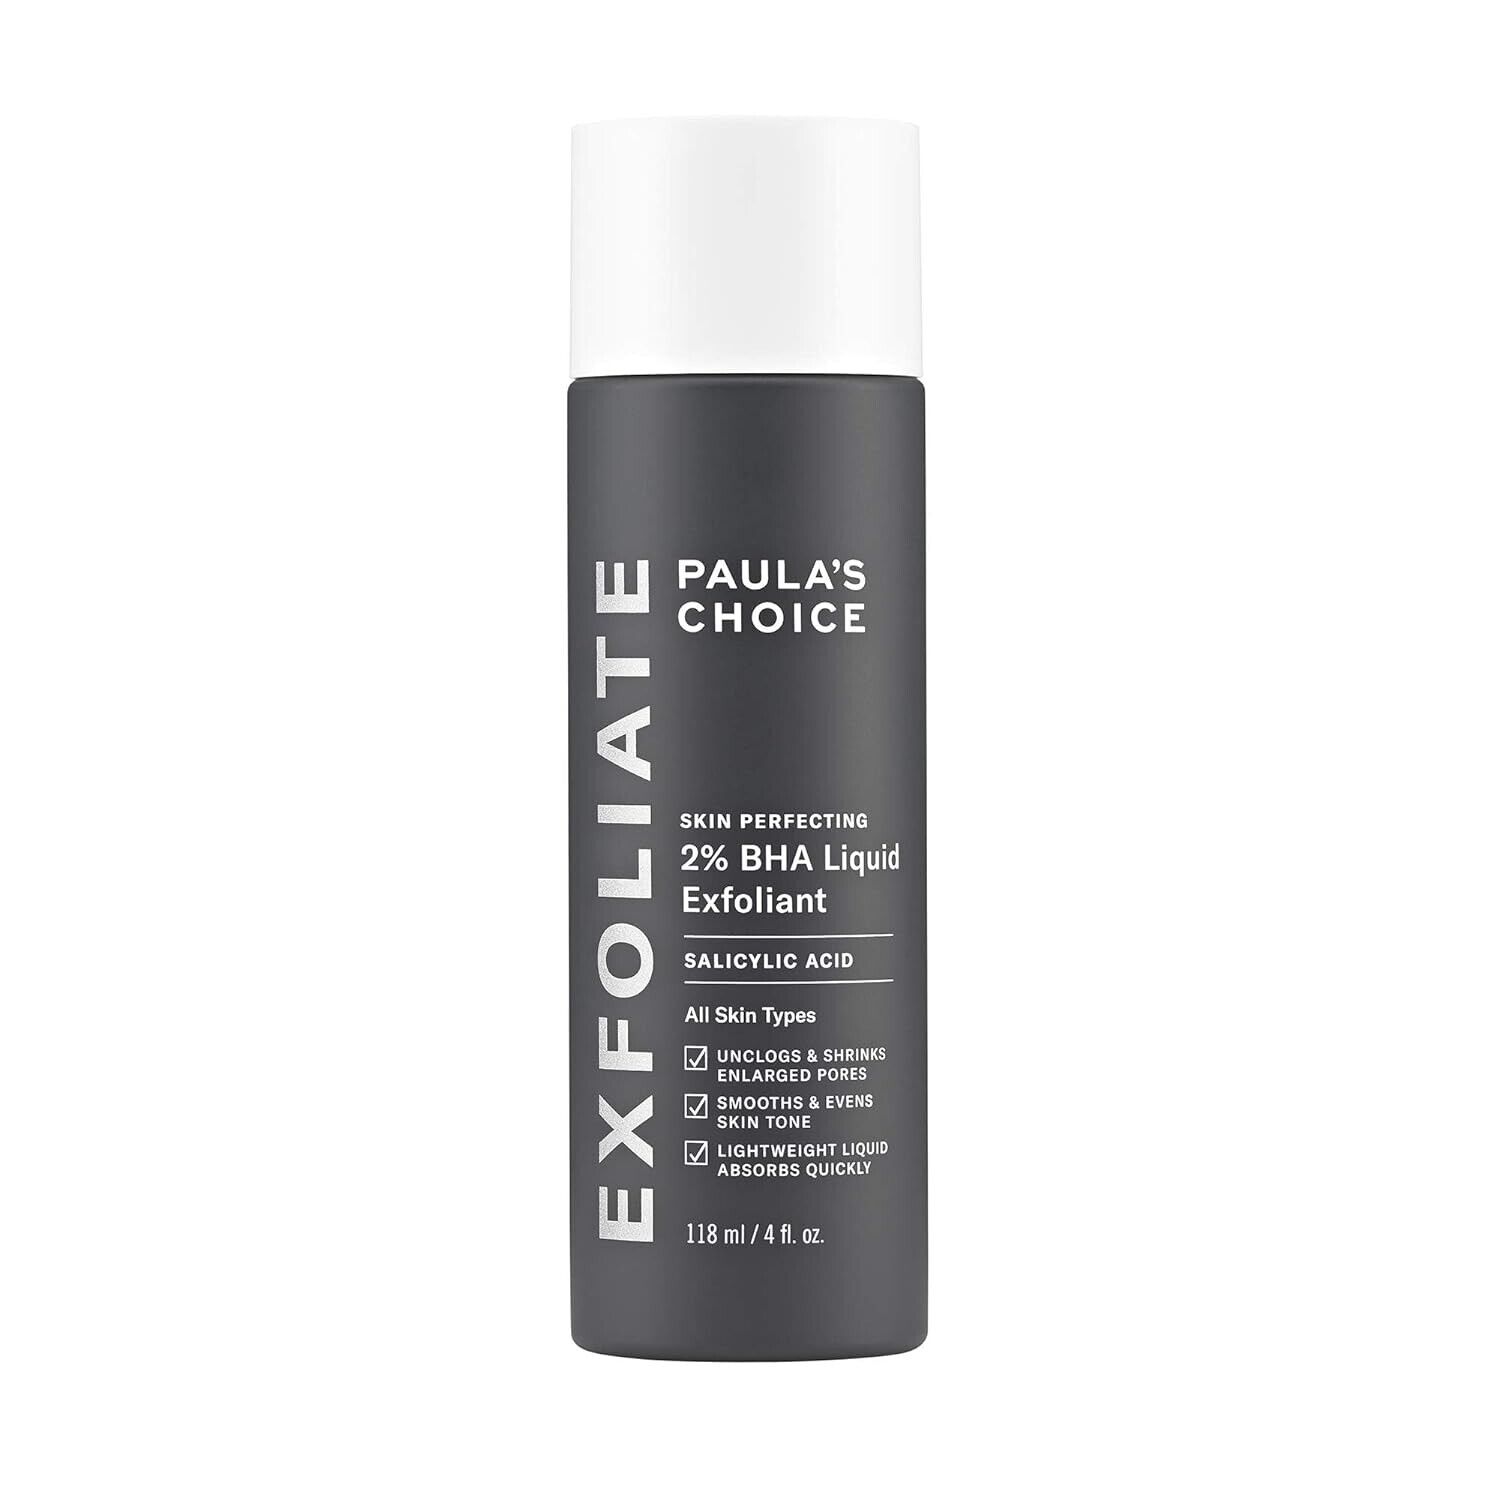 Paula's Choice Skin Perfecting 2% BHA Liquid Exfoliant Salicylic Acid 118ml 4oz